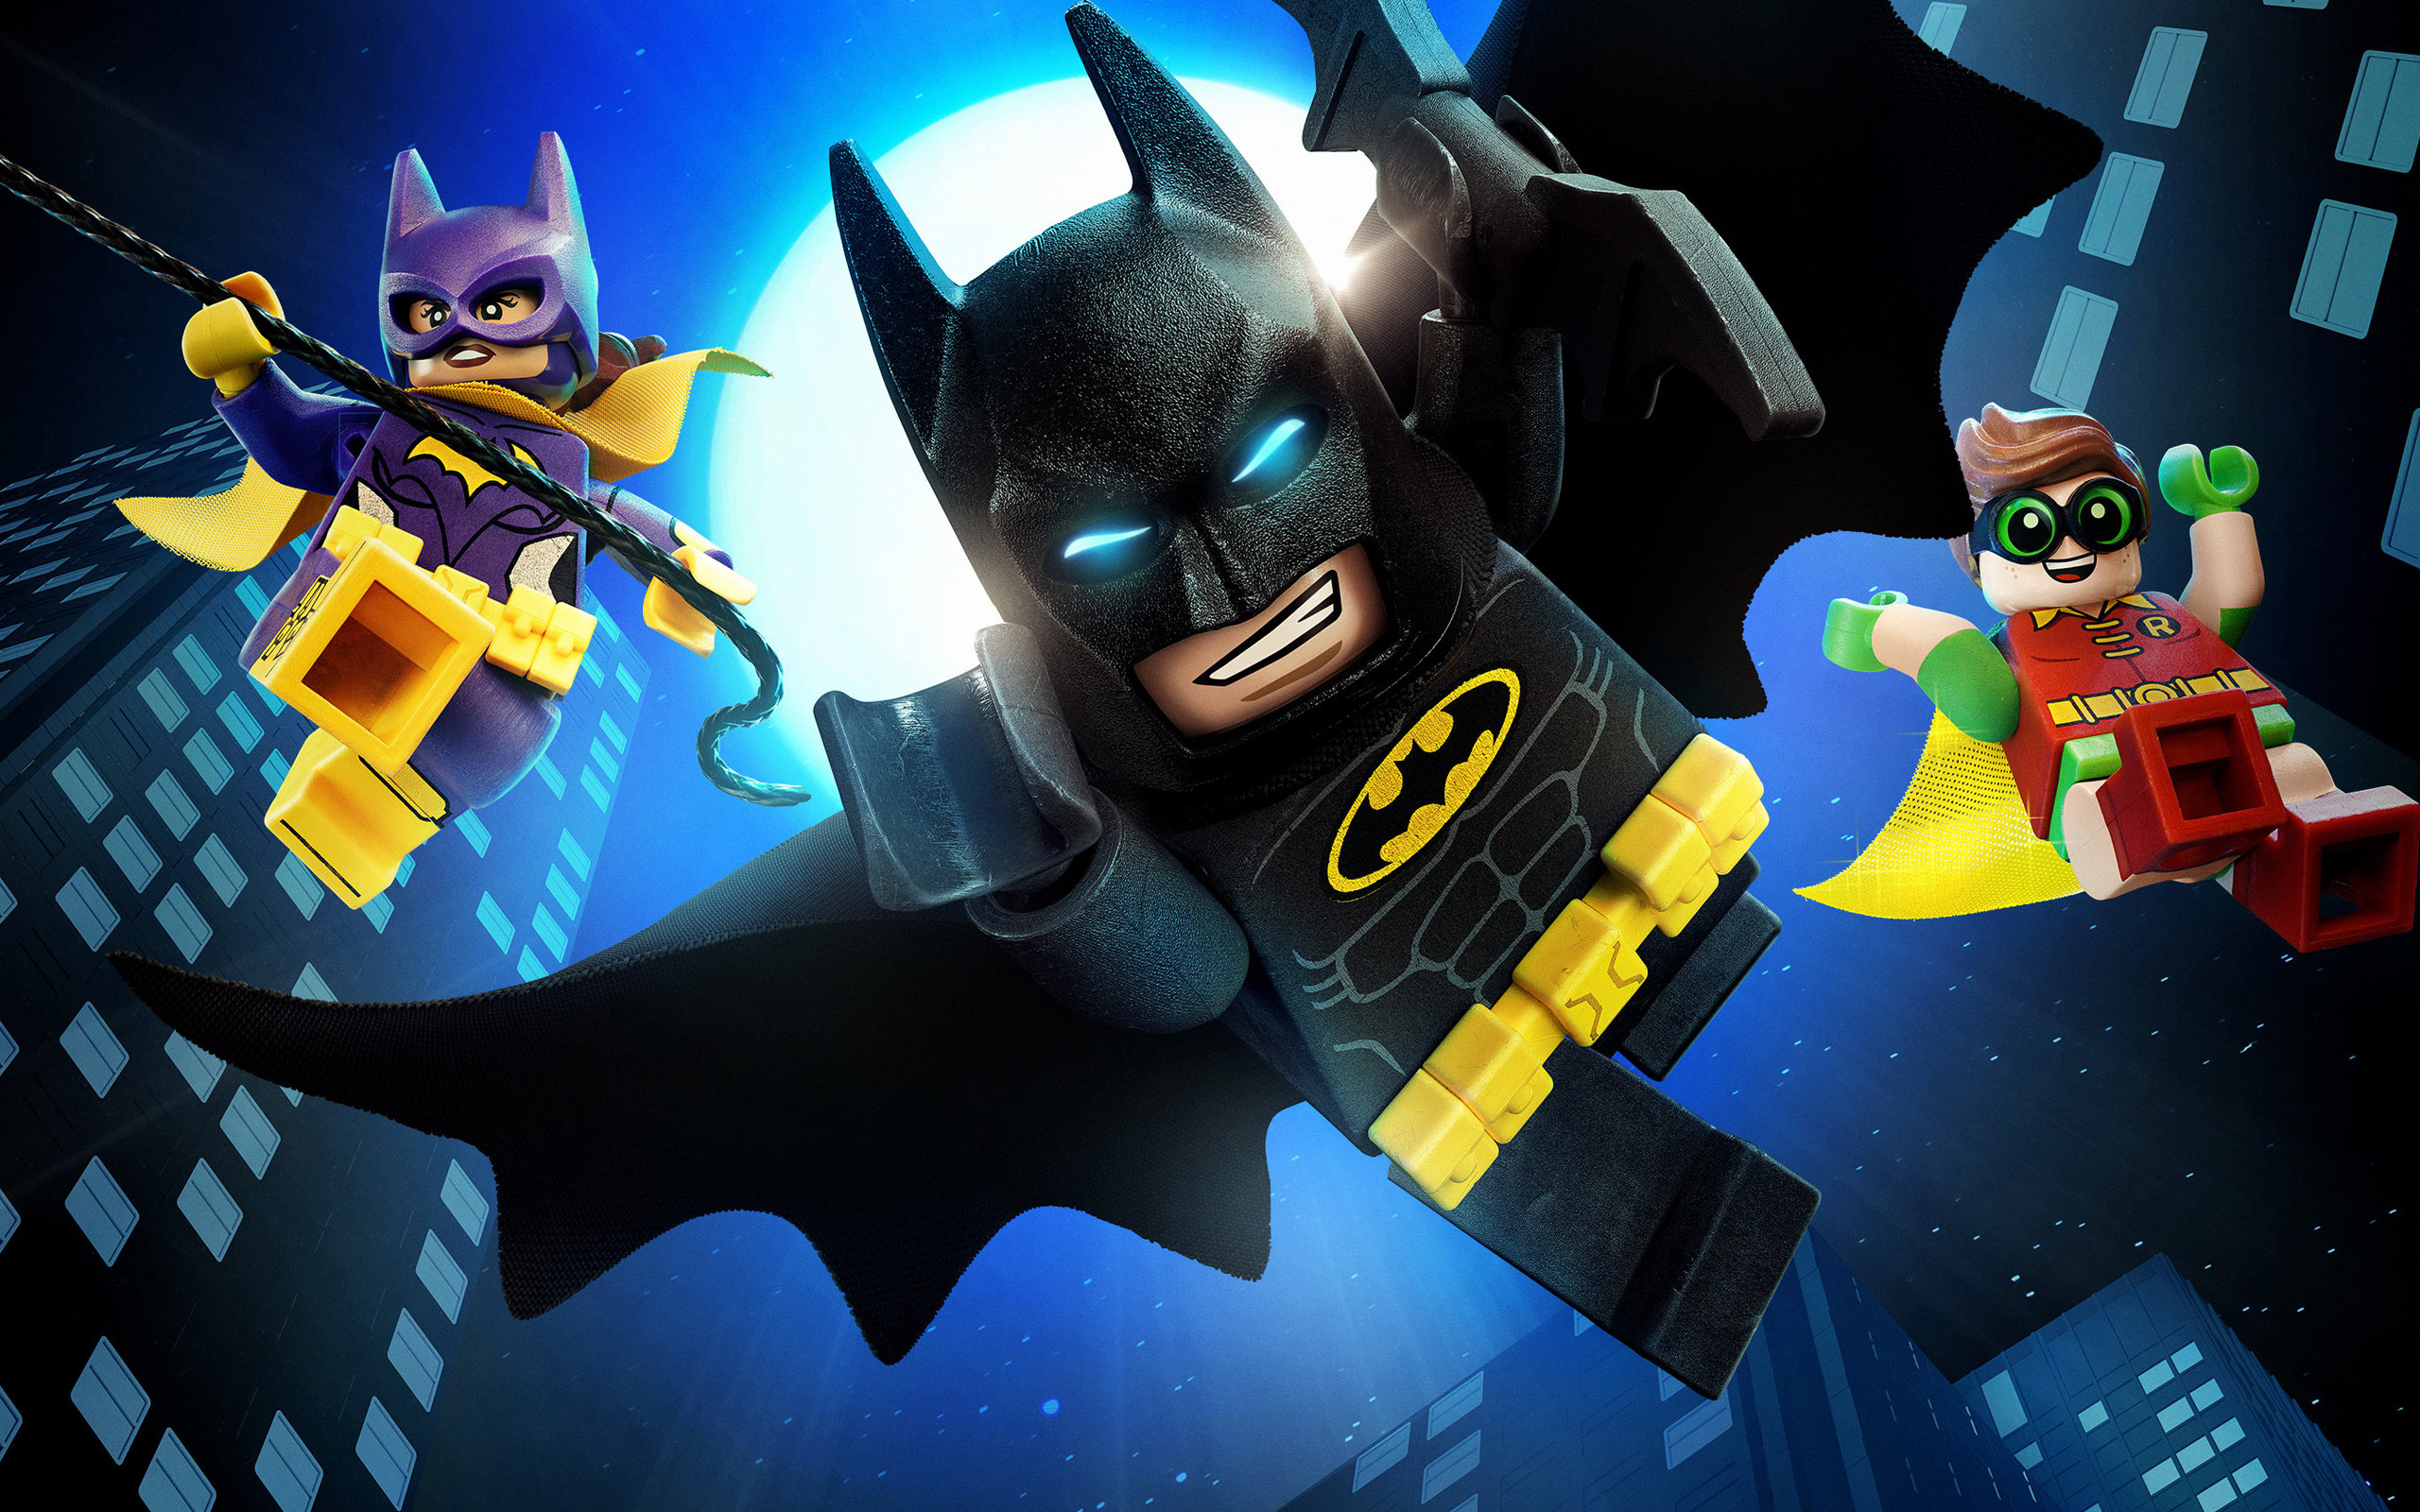 2560x1600 HD The LEGO Batman Movie wallpaper | The LEGO Batman Movie wallpapers hd |  Pinterest | Movie wallpapers, Lego batman movie and Lego batman